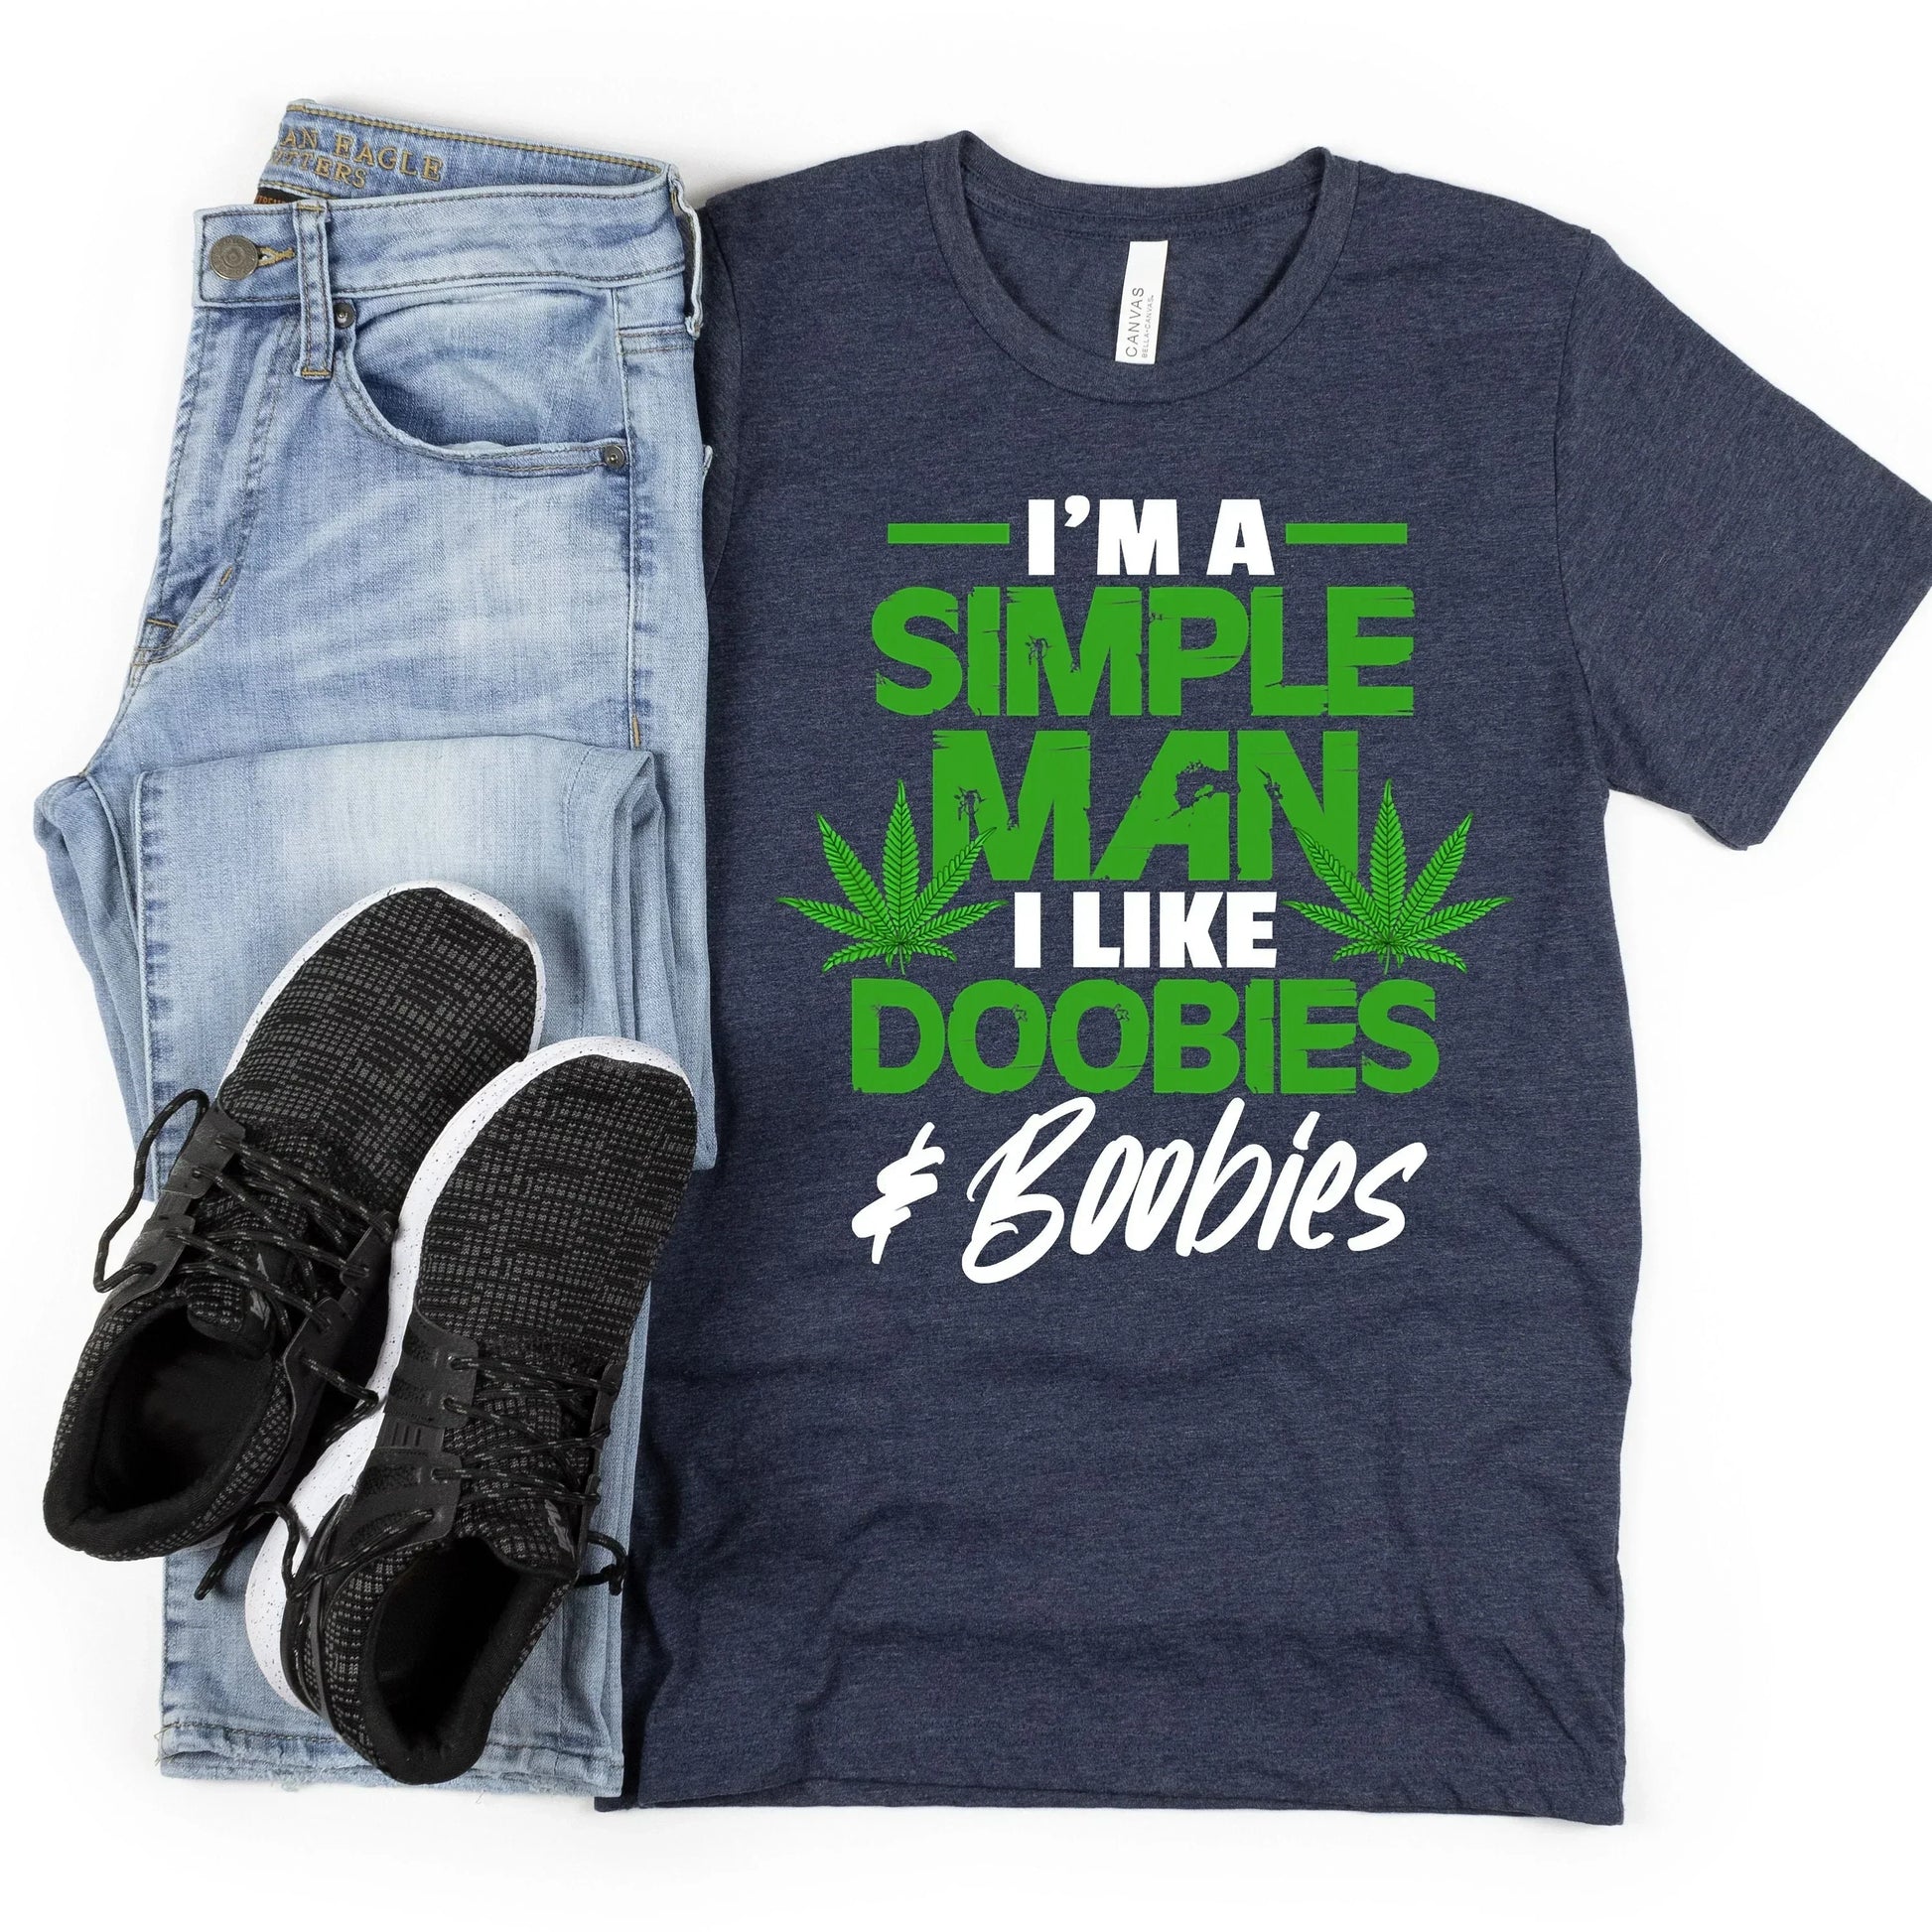 I'm a simple man, I like Doobies and Boobies, Stoner Shirt for Him HMDesignStudioUS